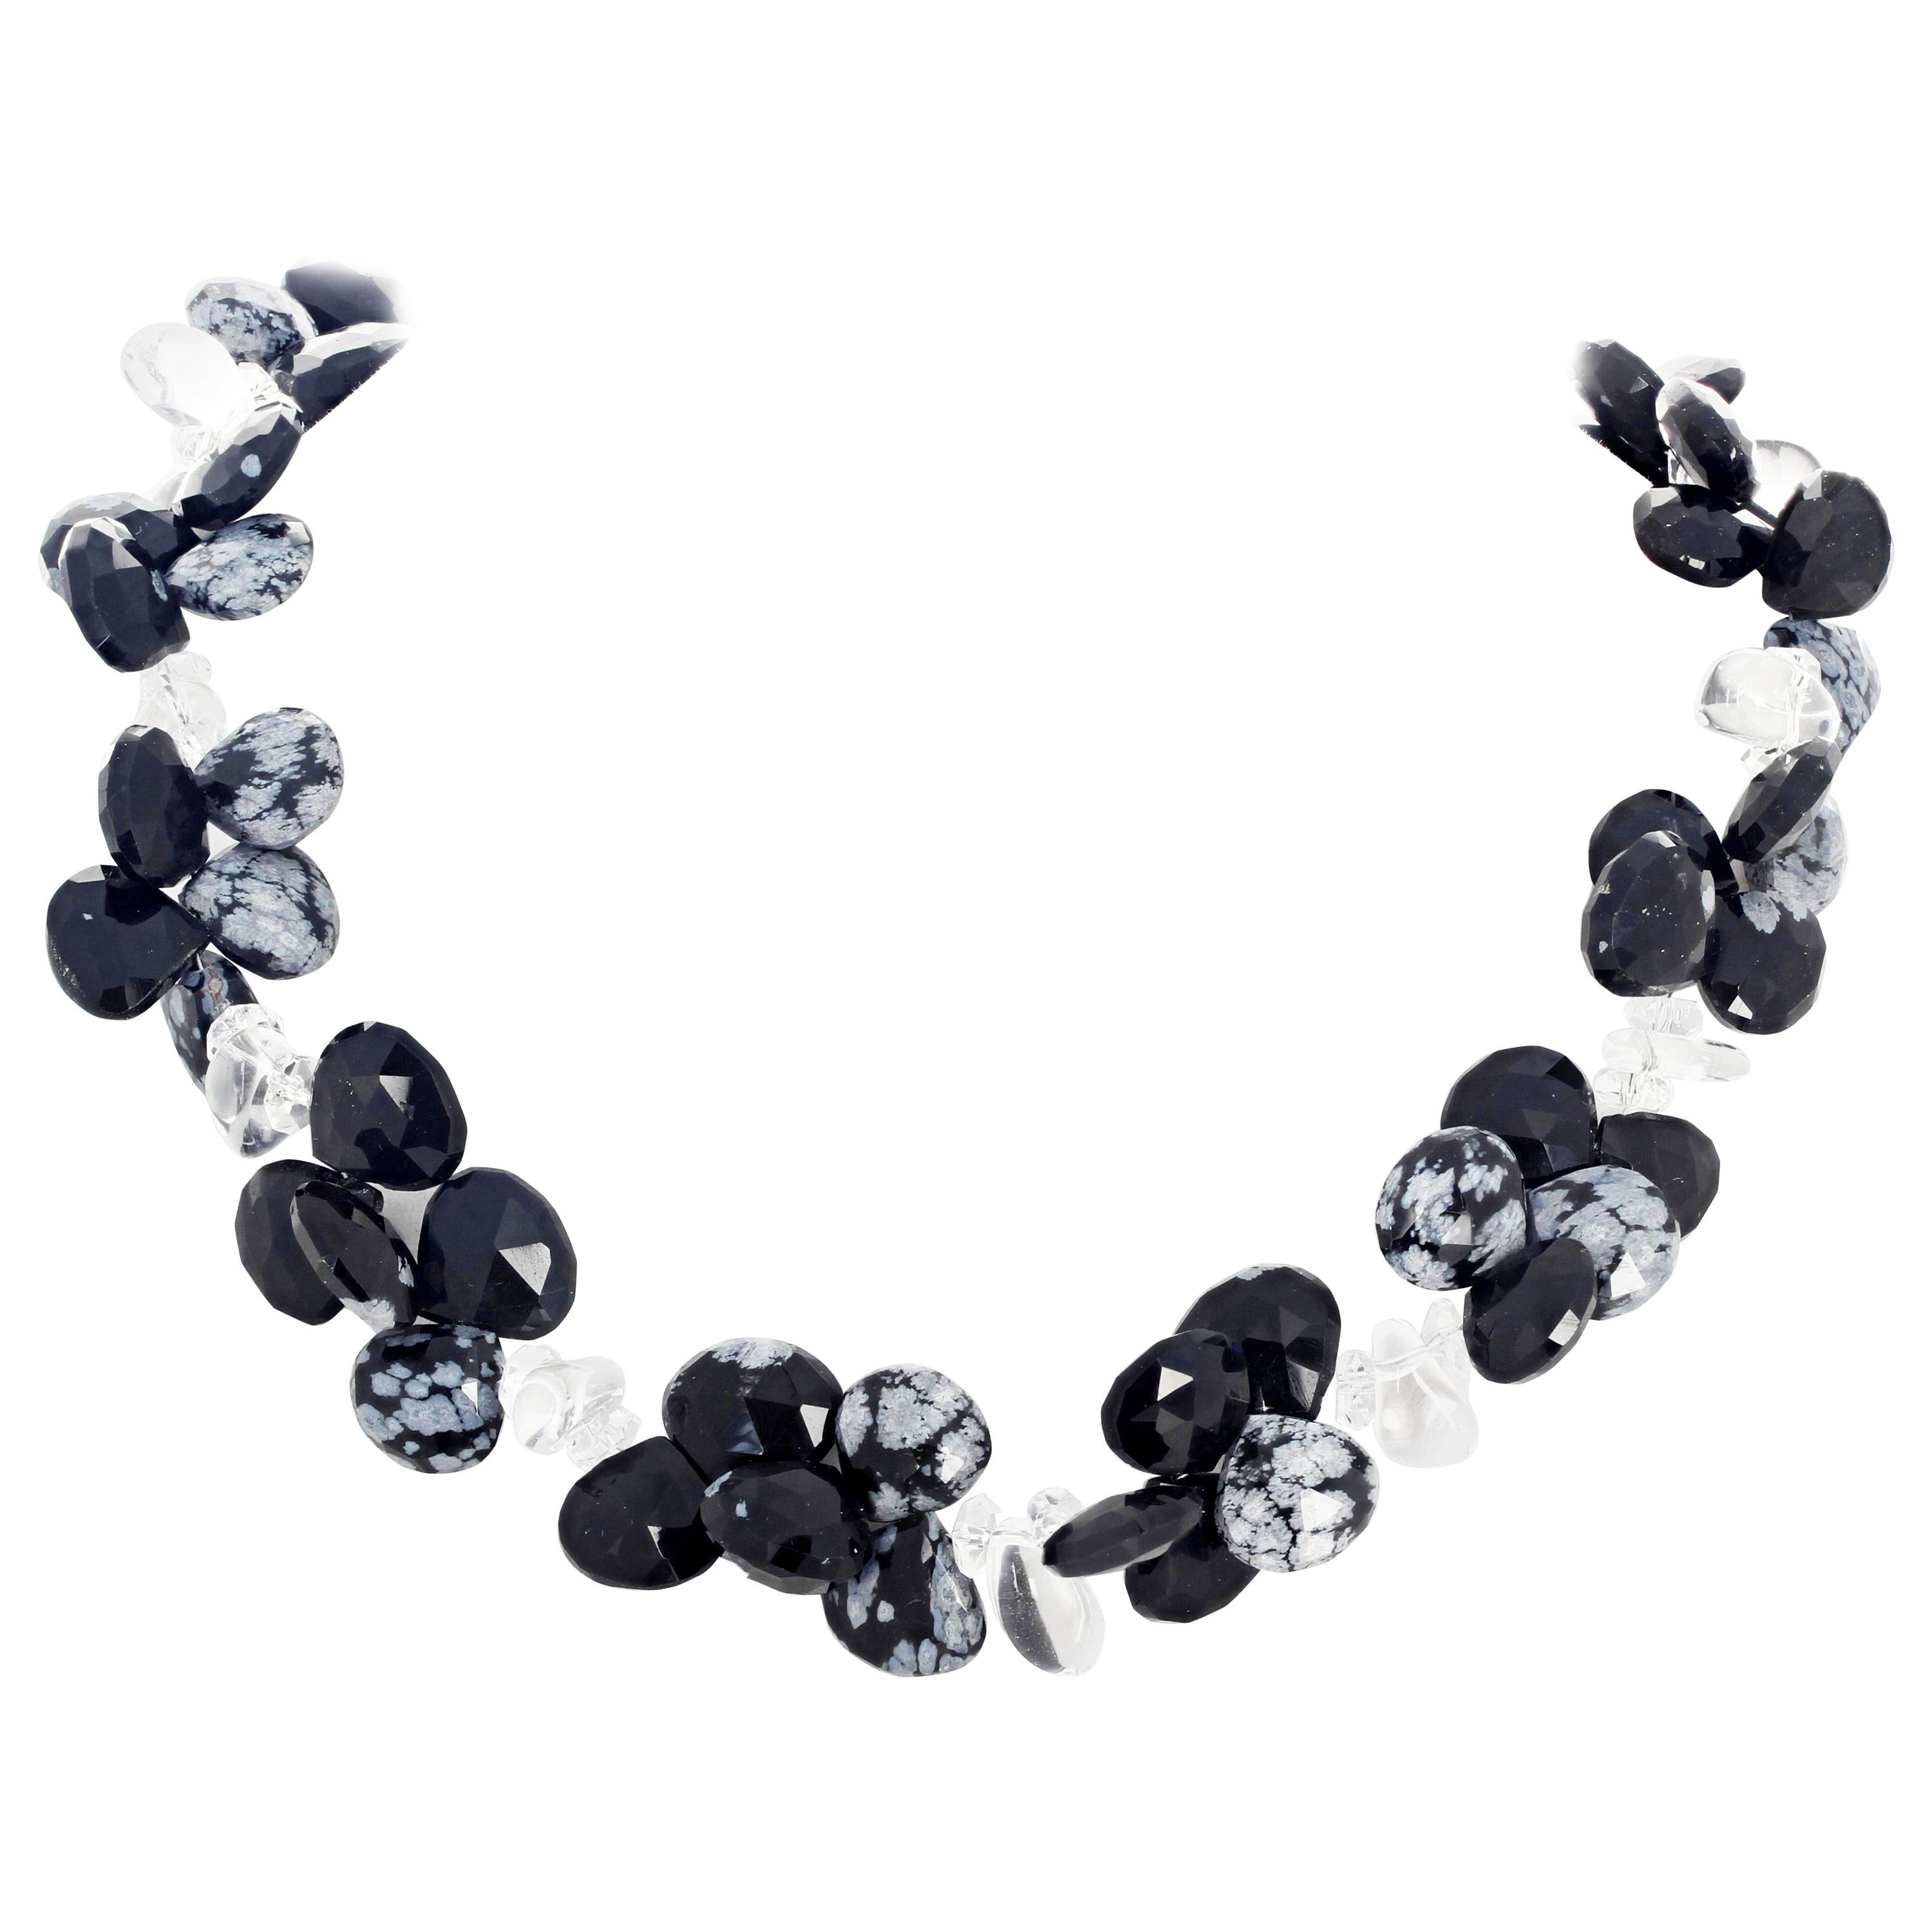 AJD Gorgeous Dramatic Unique Snowflake Obsidian Silvery White Quartz Necklace